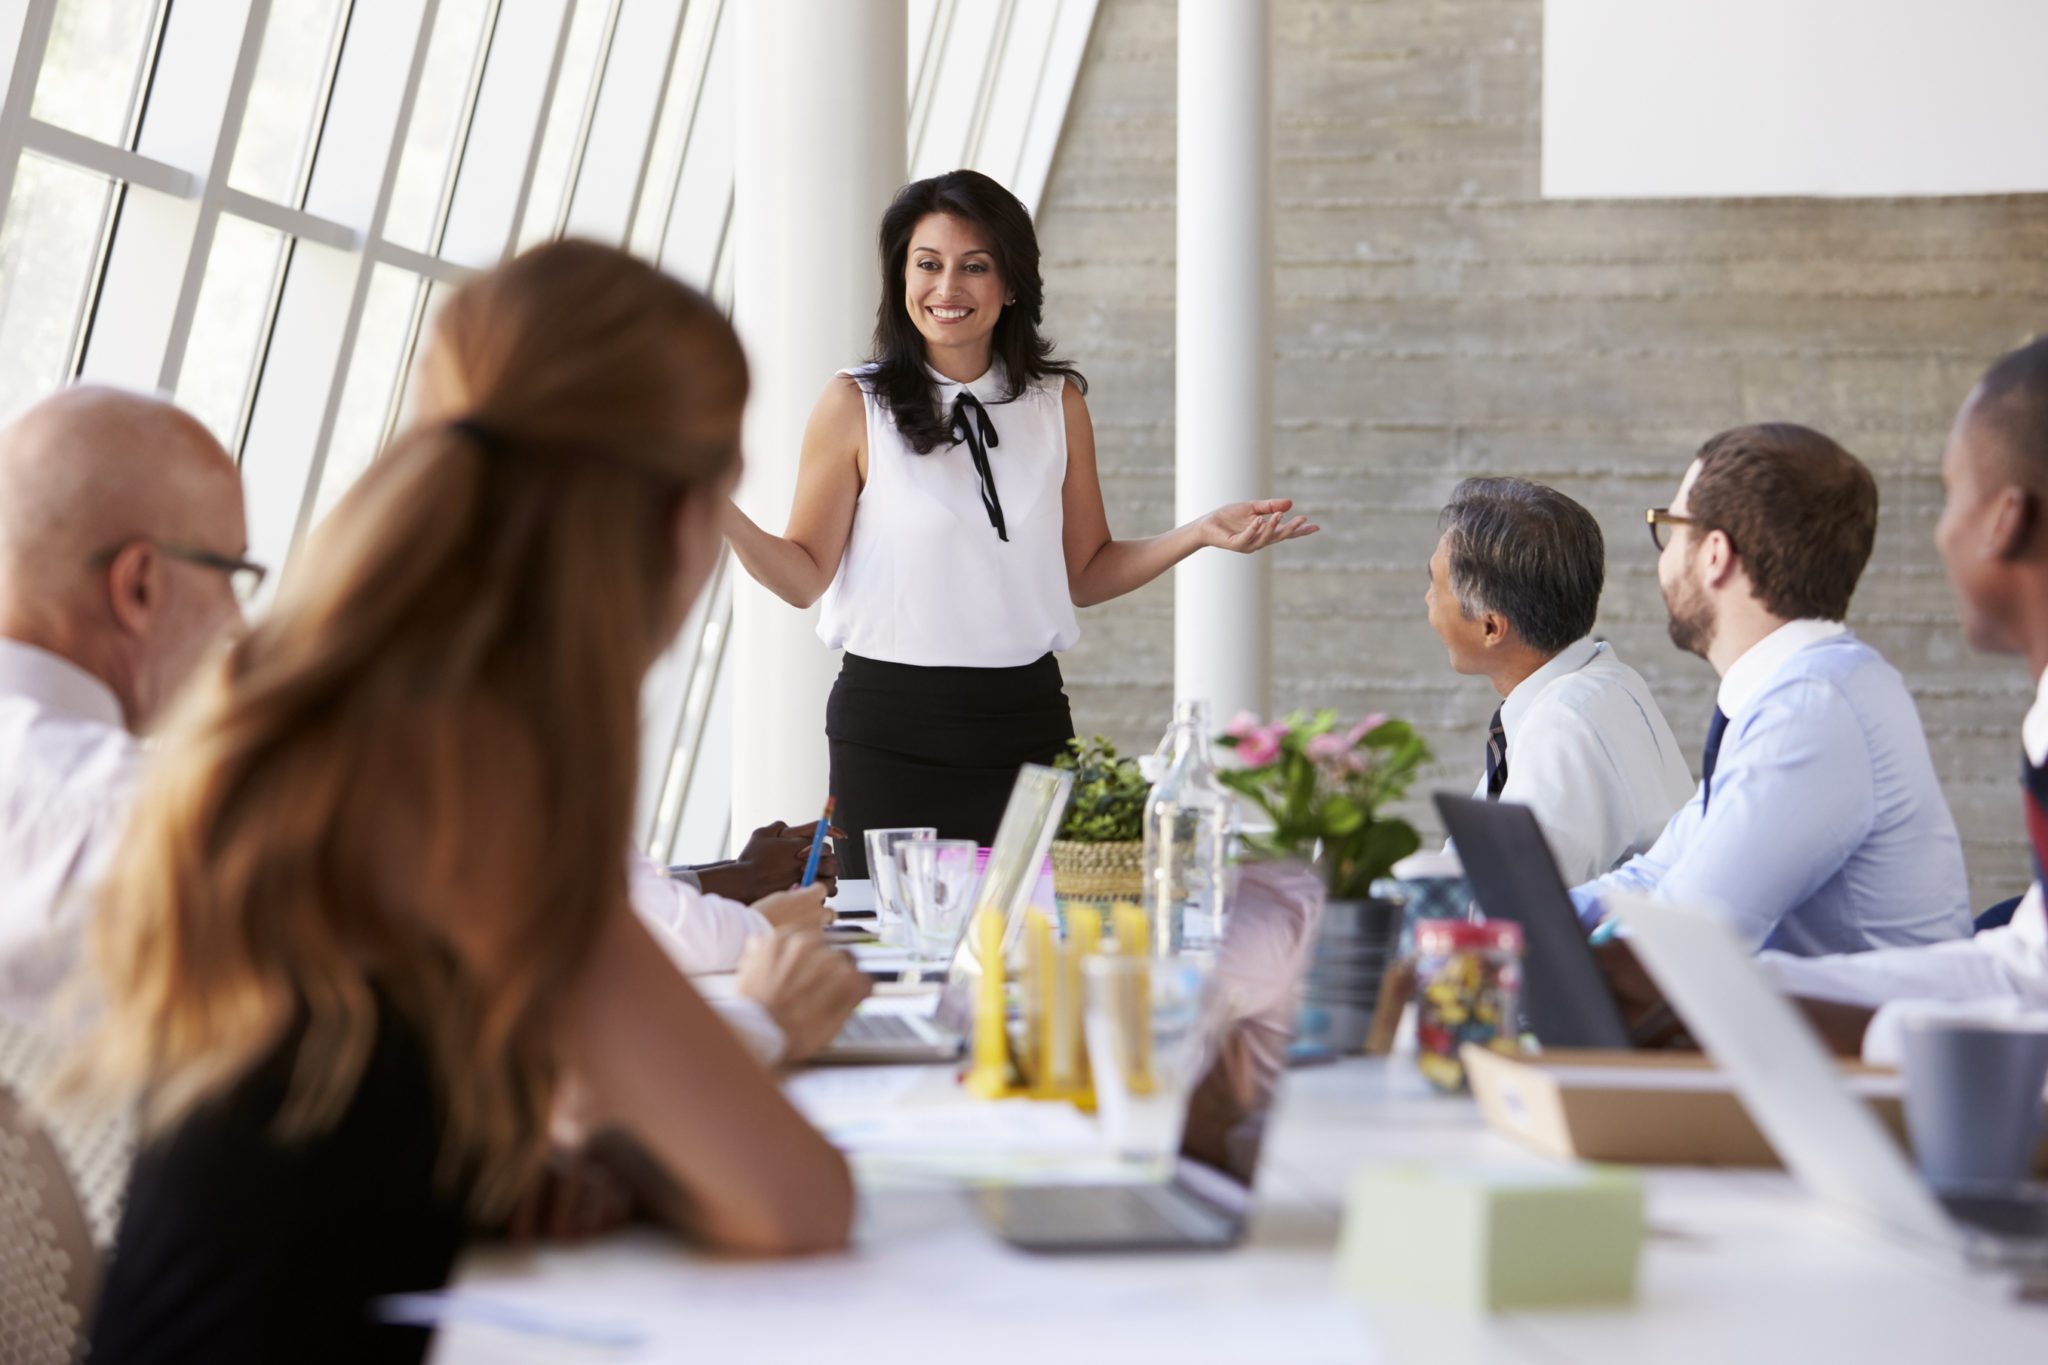 Hispanic Businesswoman Leading Meeting At Boardroom Table